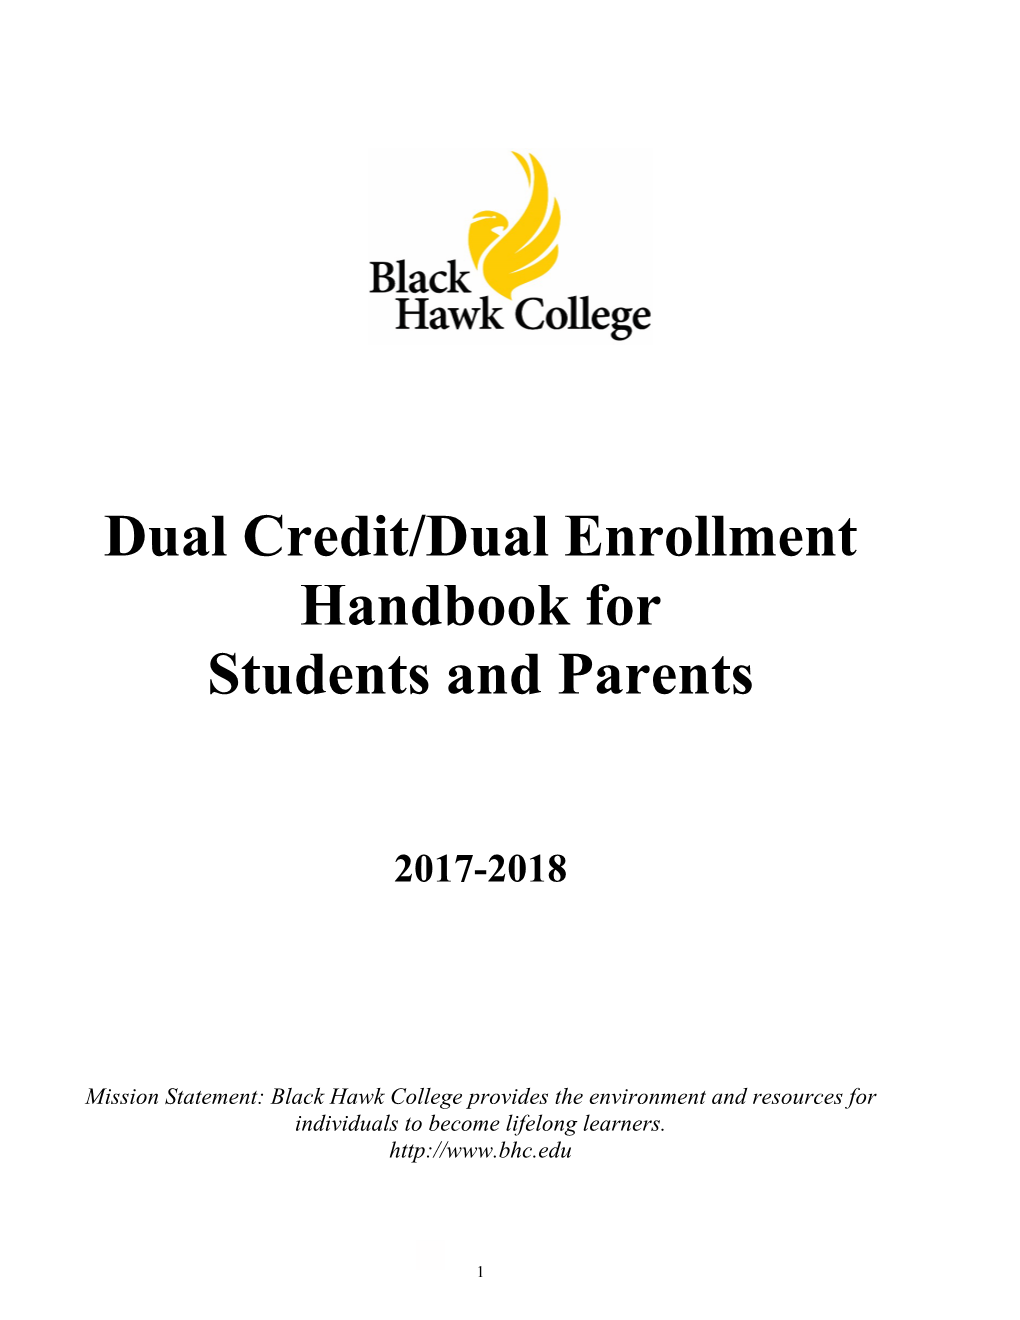 Dual Credit/Dual Enrollment Handbook for Students and Parents